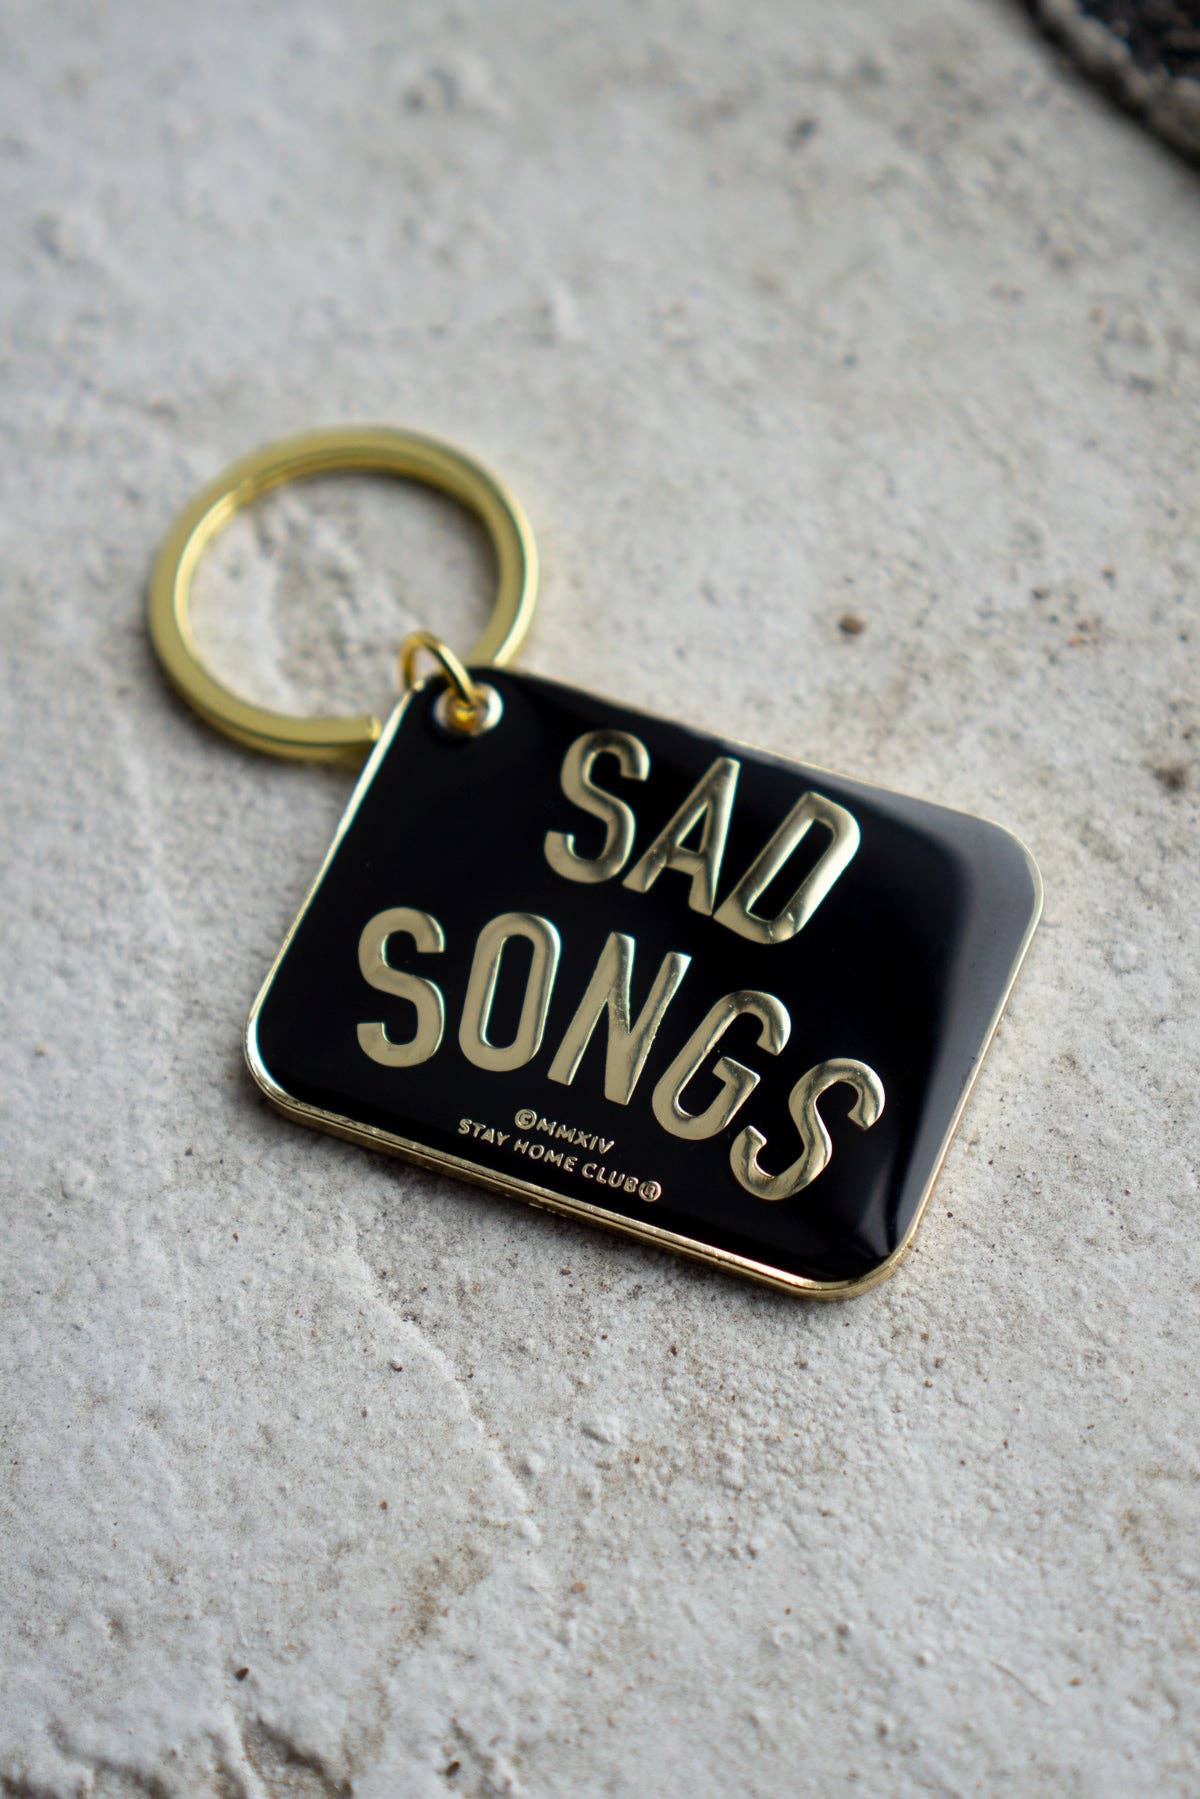 Sad Songs Keychain